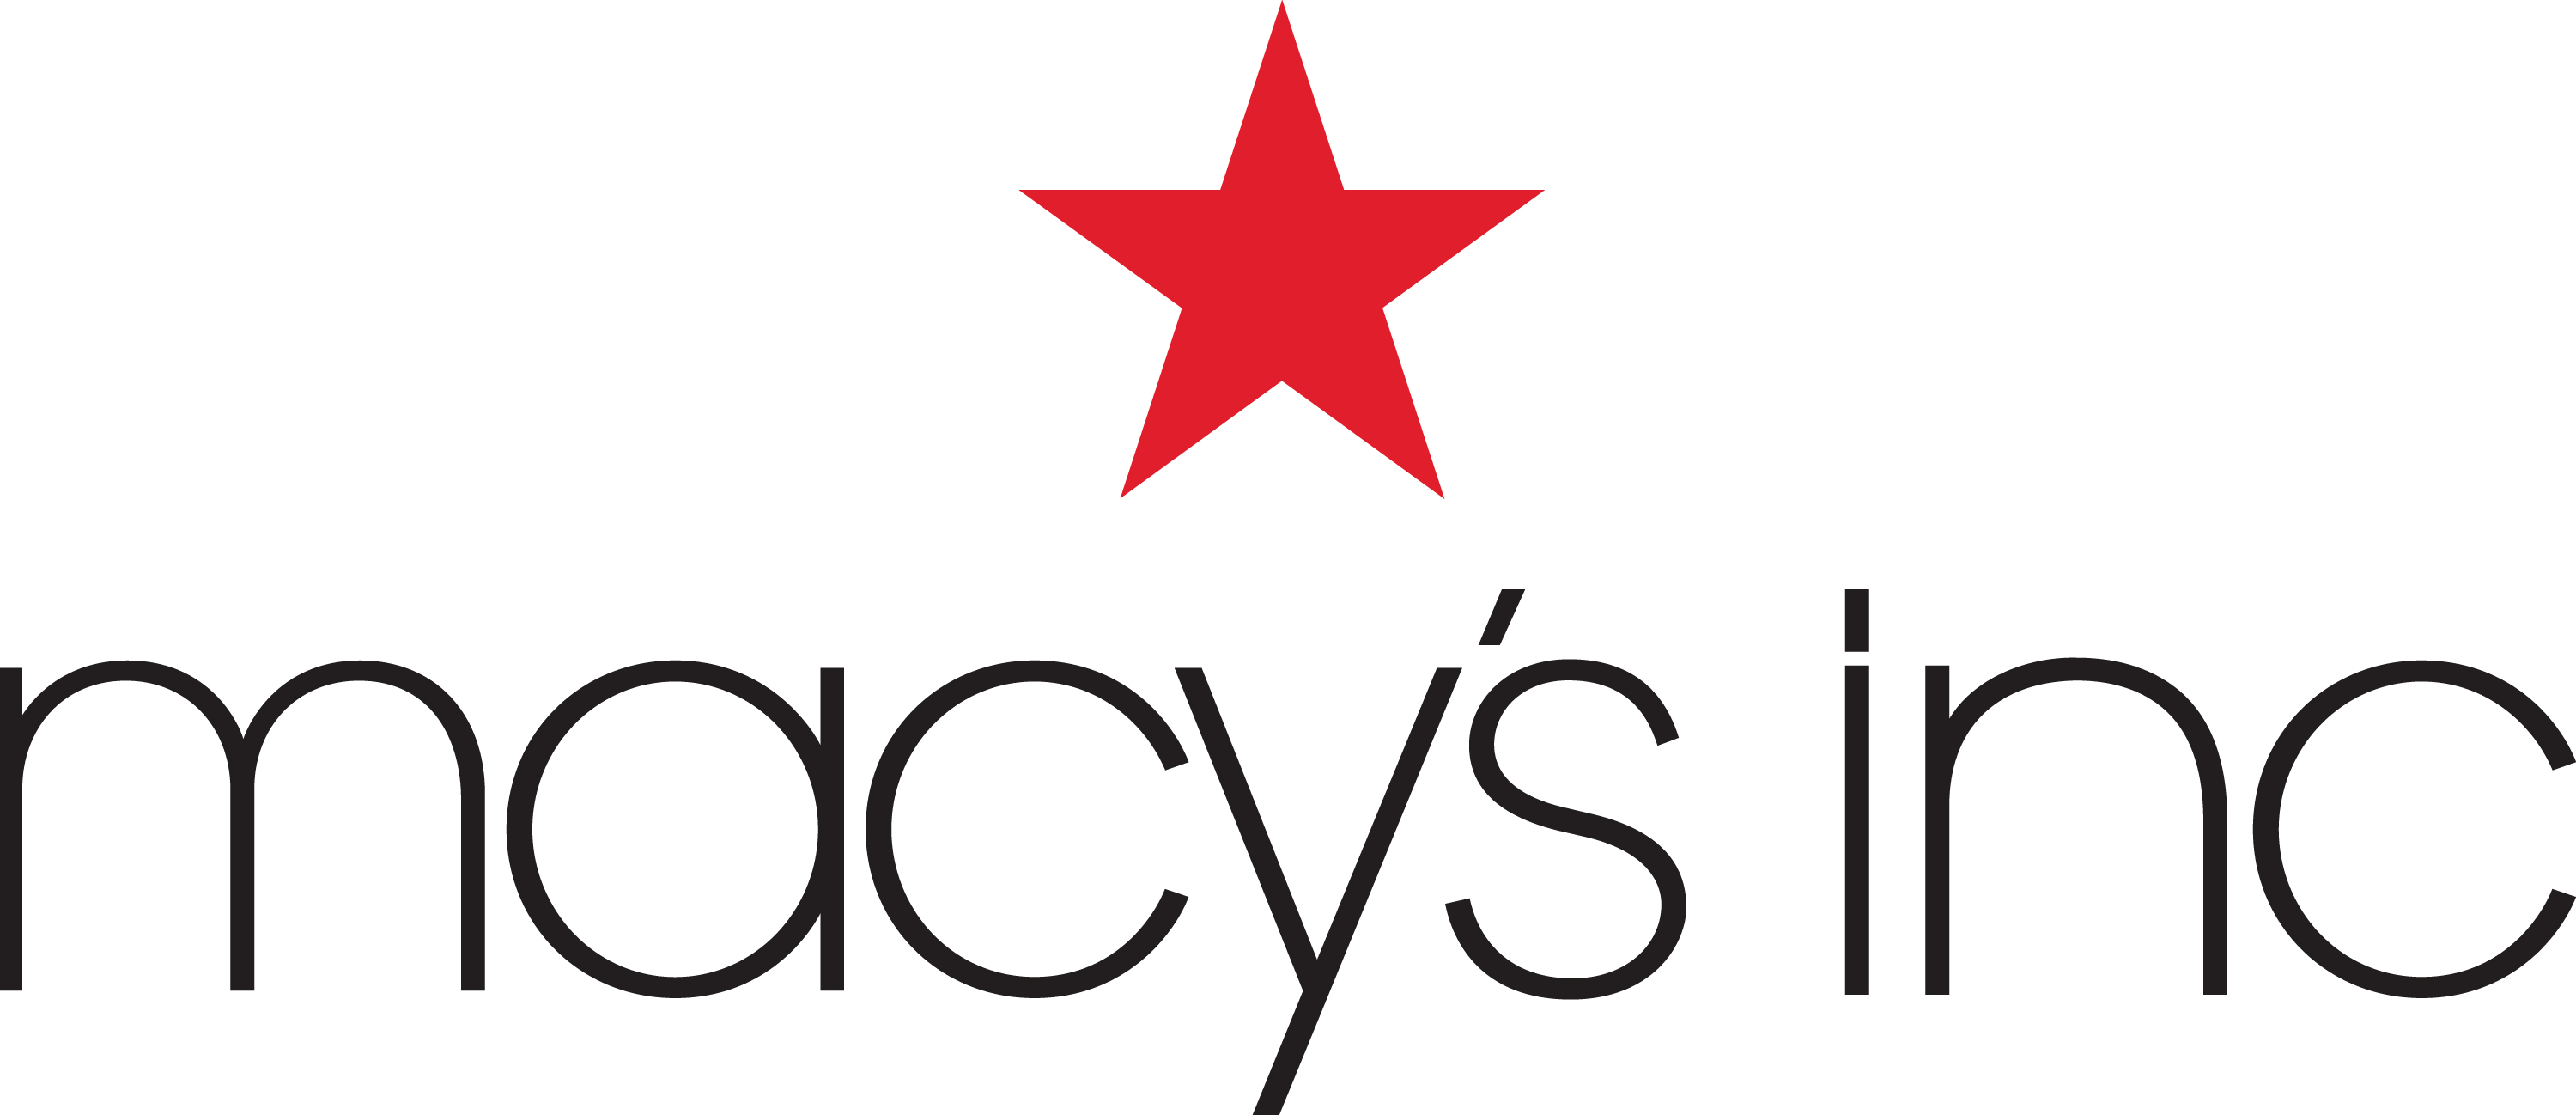 Macy's Inc.